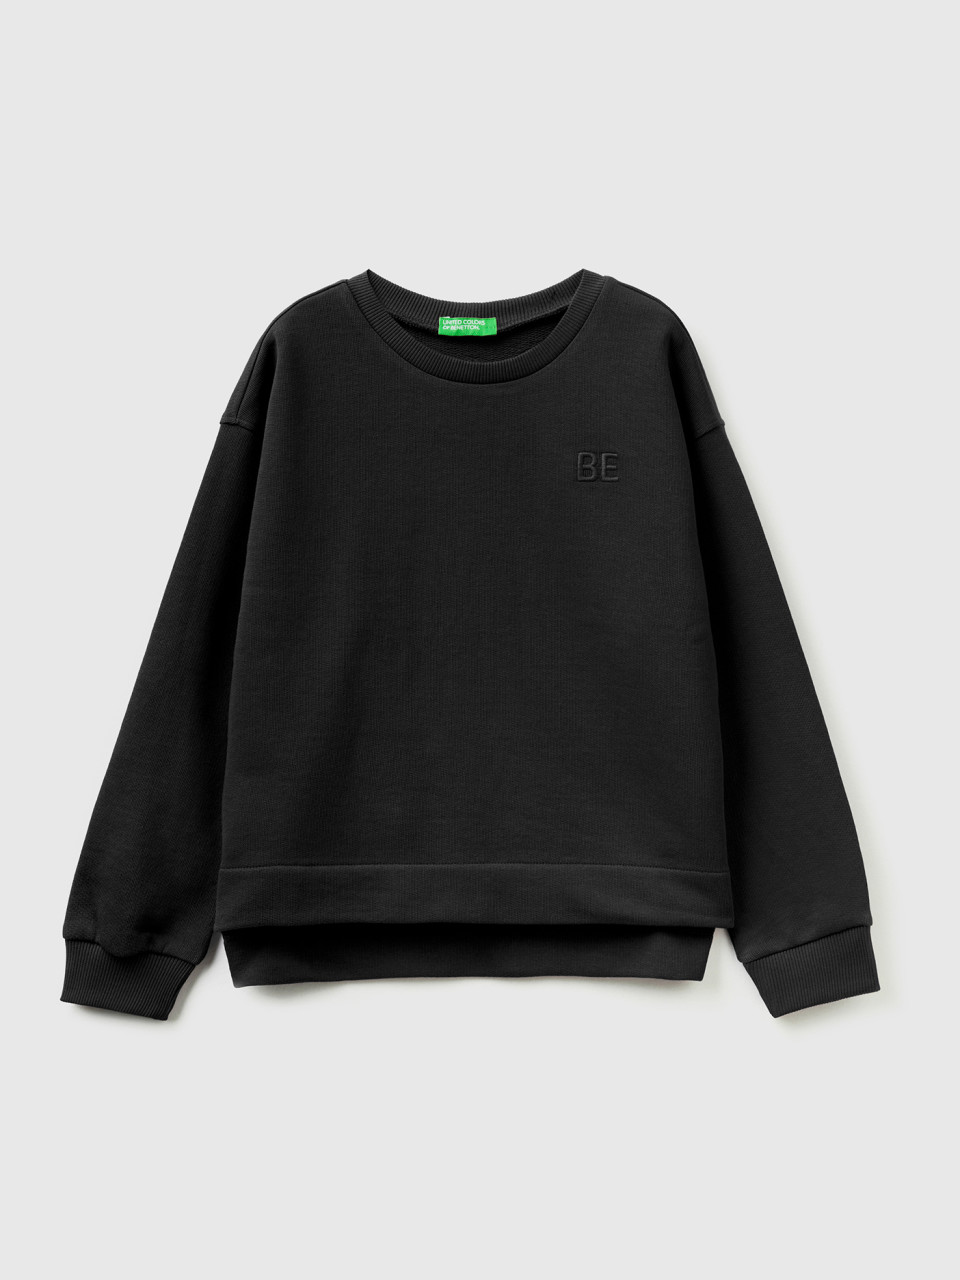 Benetton, Sweatshirt With be Embroidery, Black, Kids